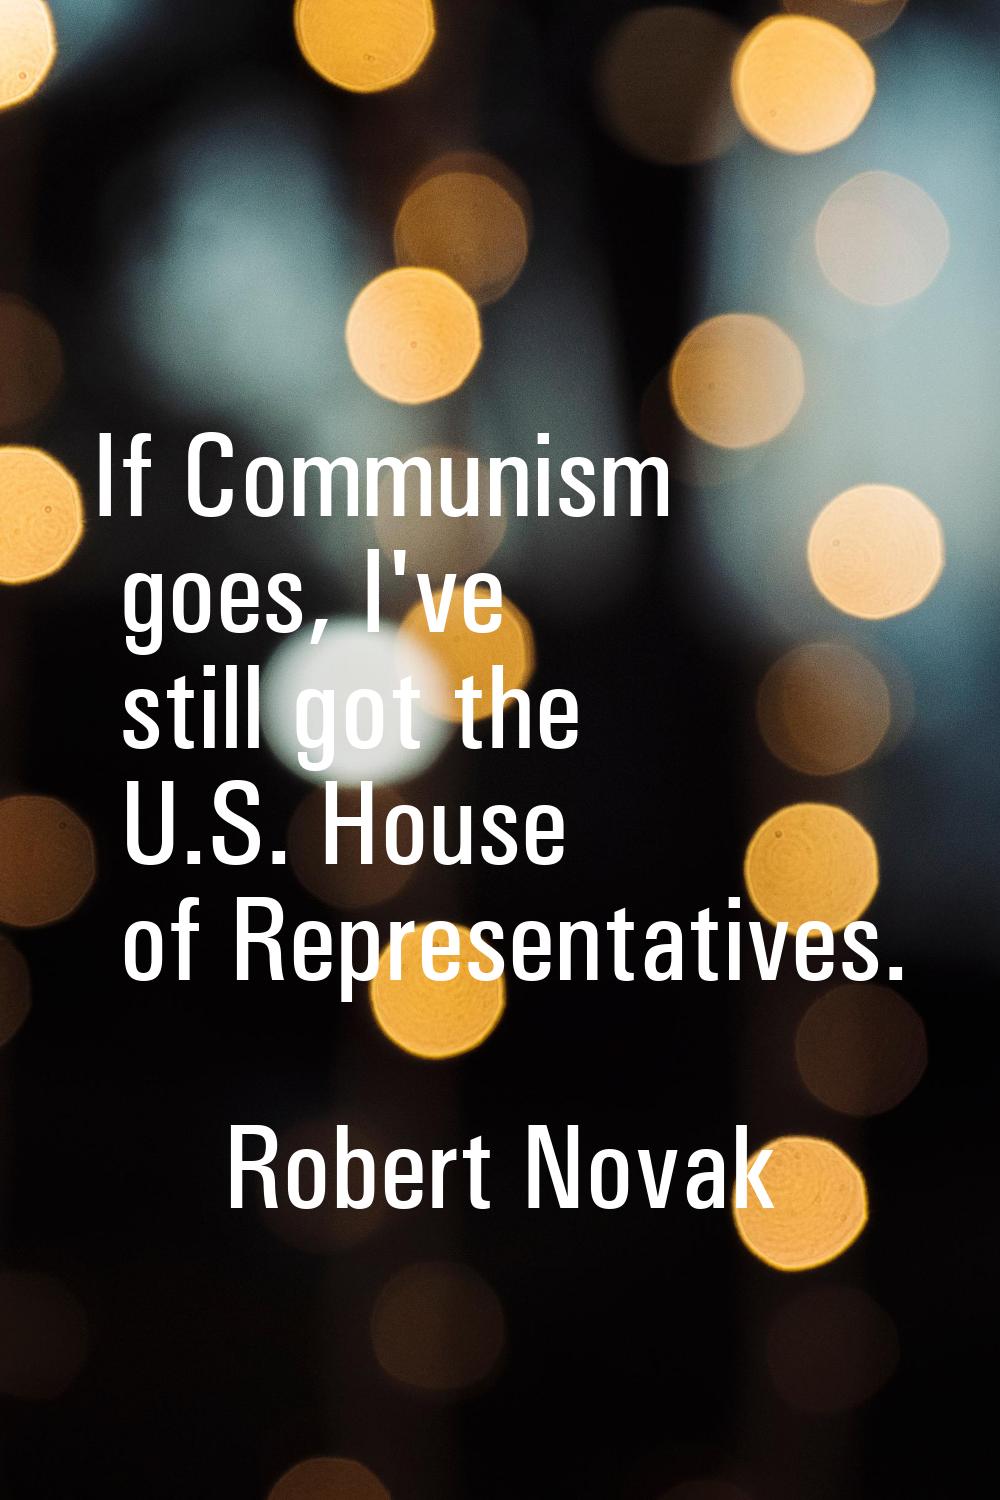 If Communism goes, I've still got the U.S. House of Representatives.